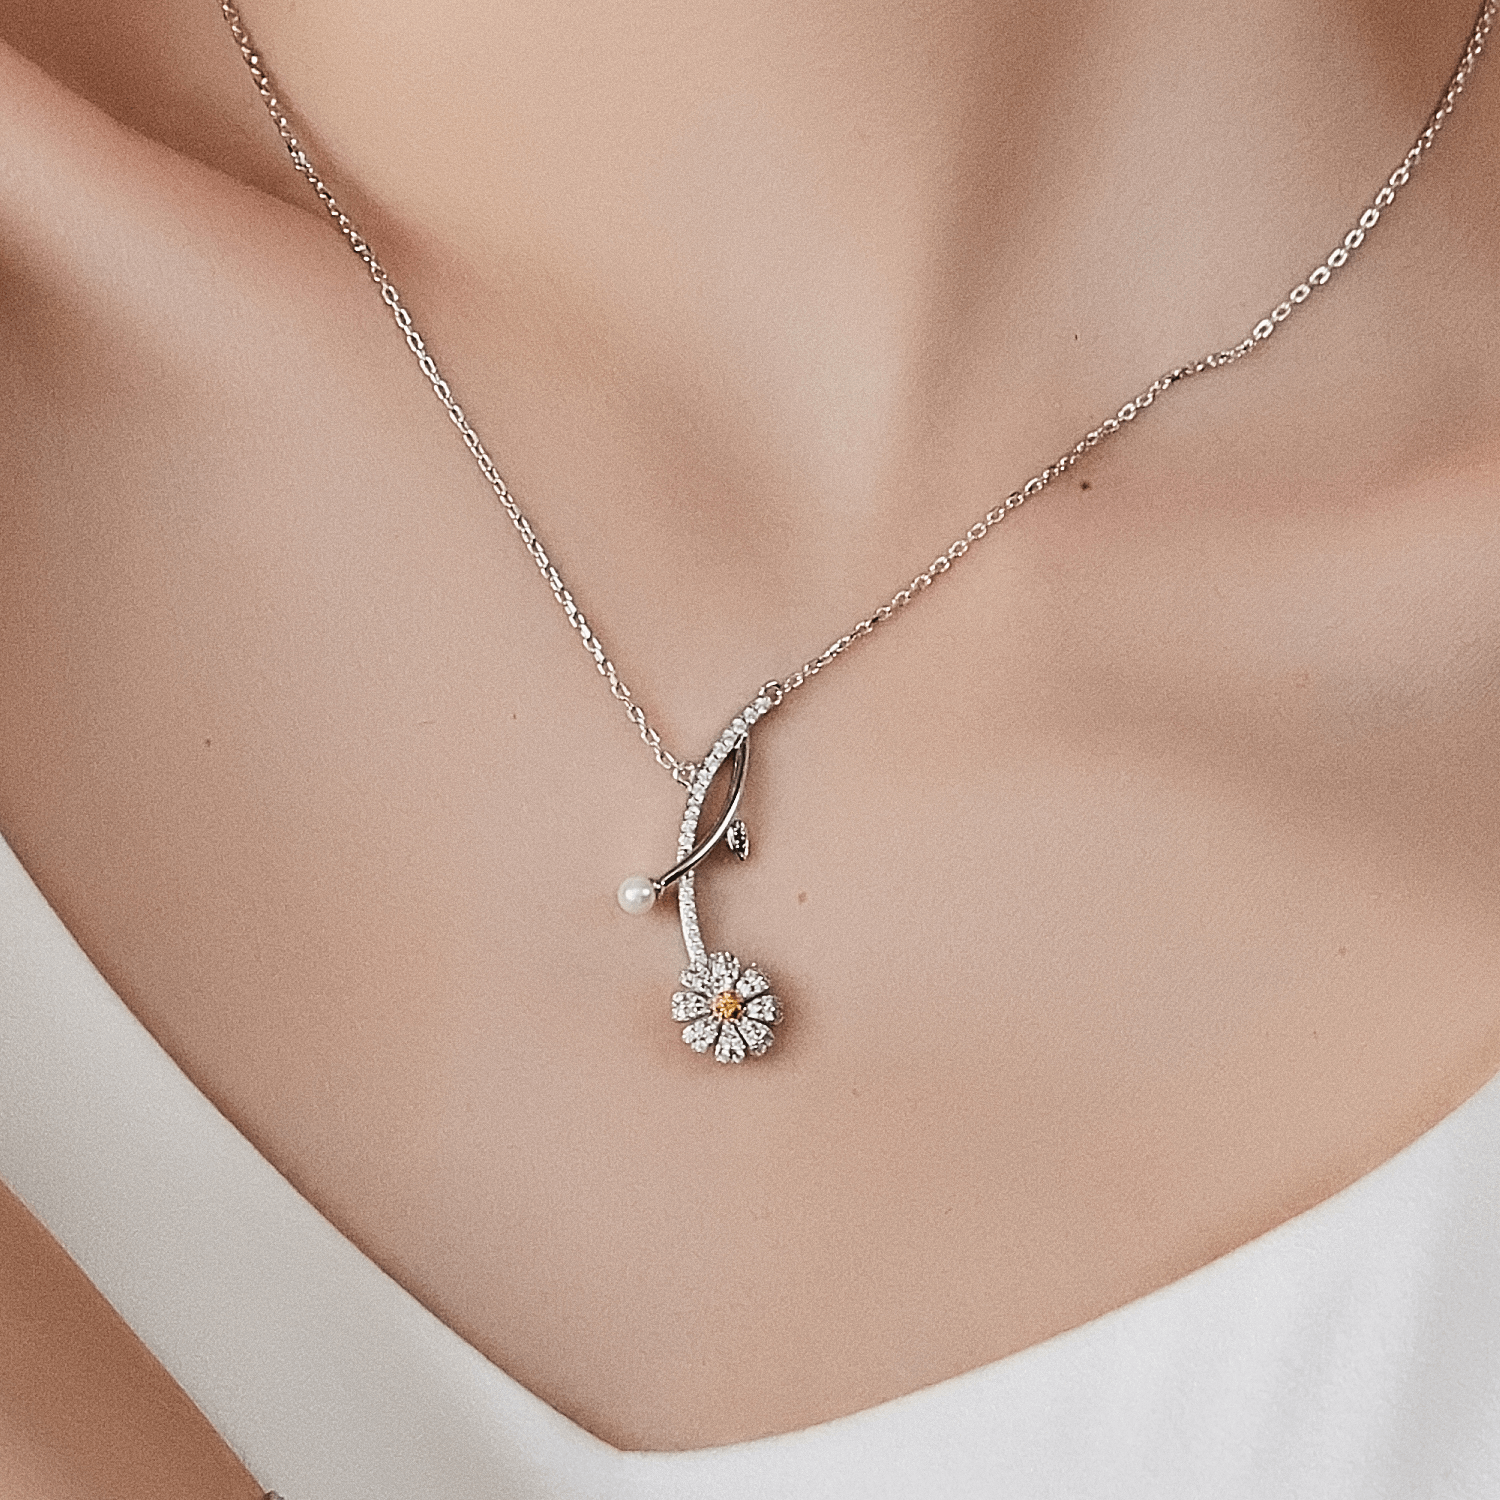 Daisy Pendant Necklace